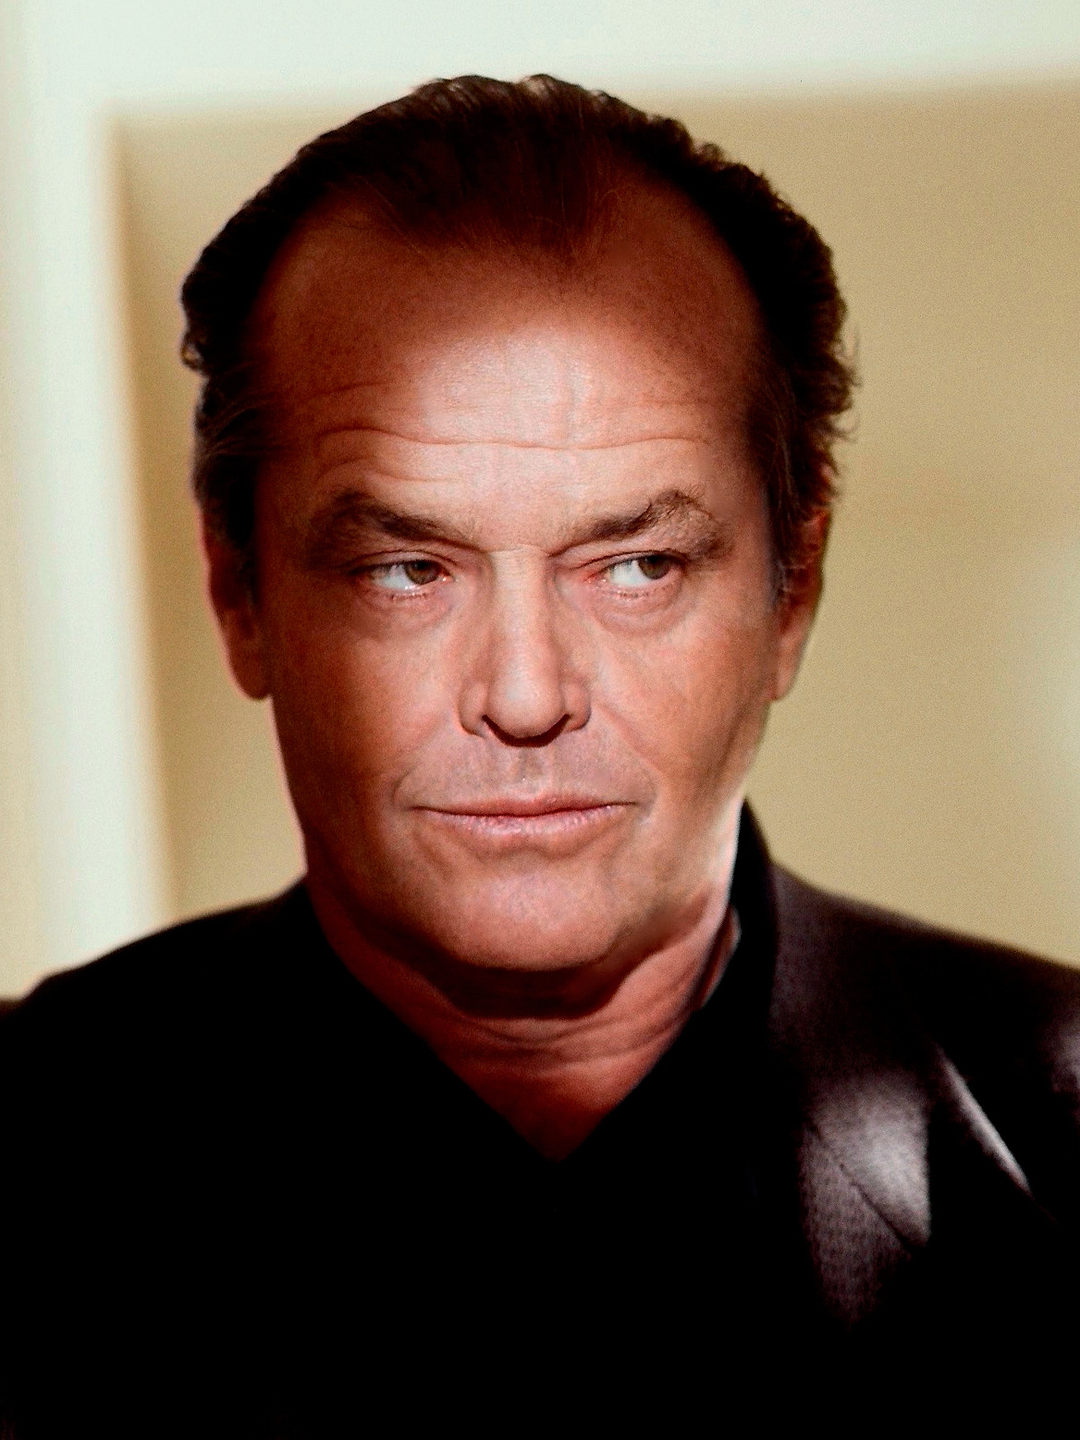 Jack Nicholson early career